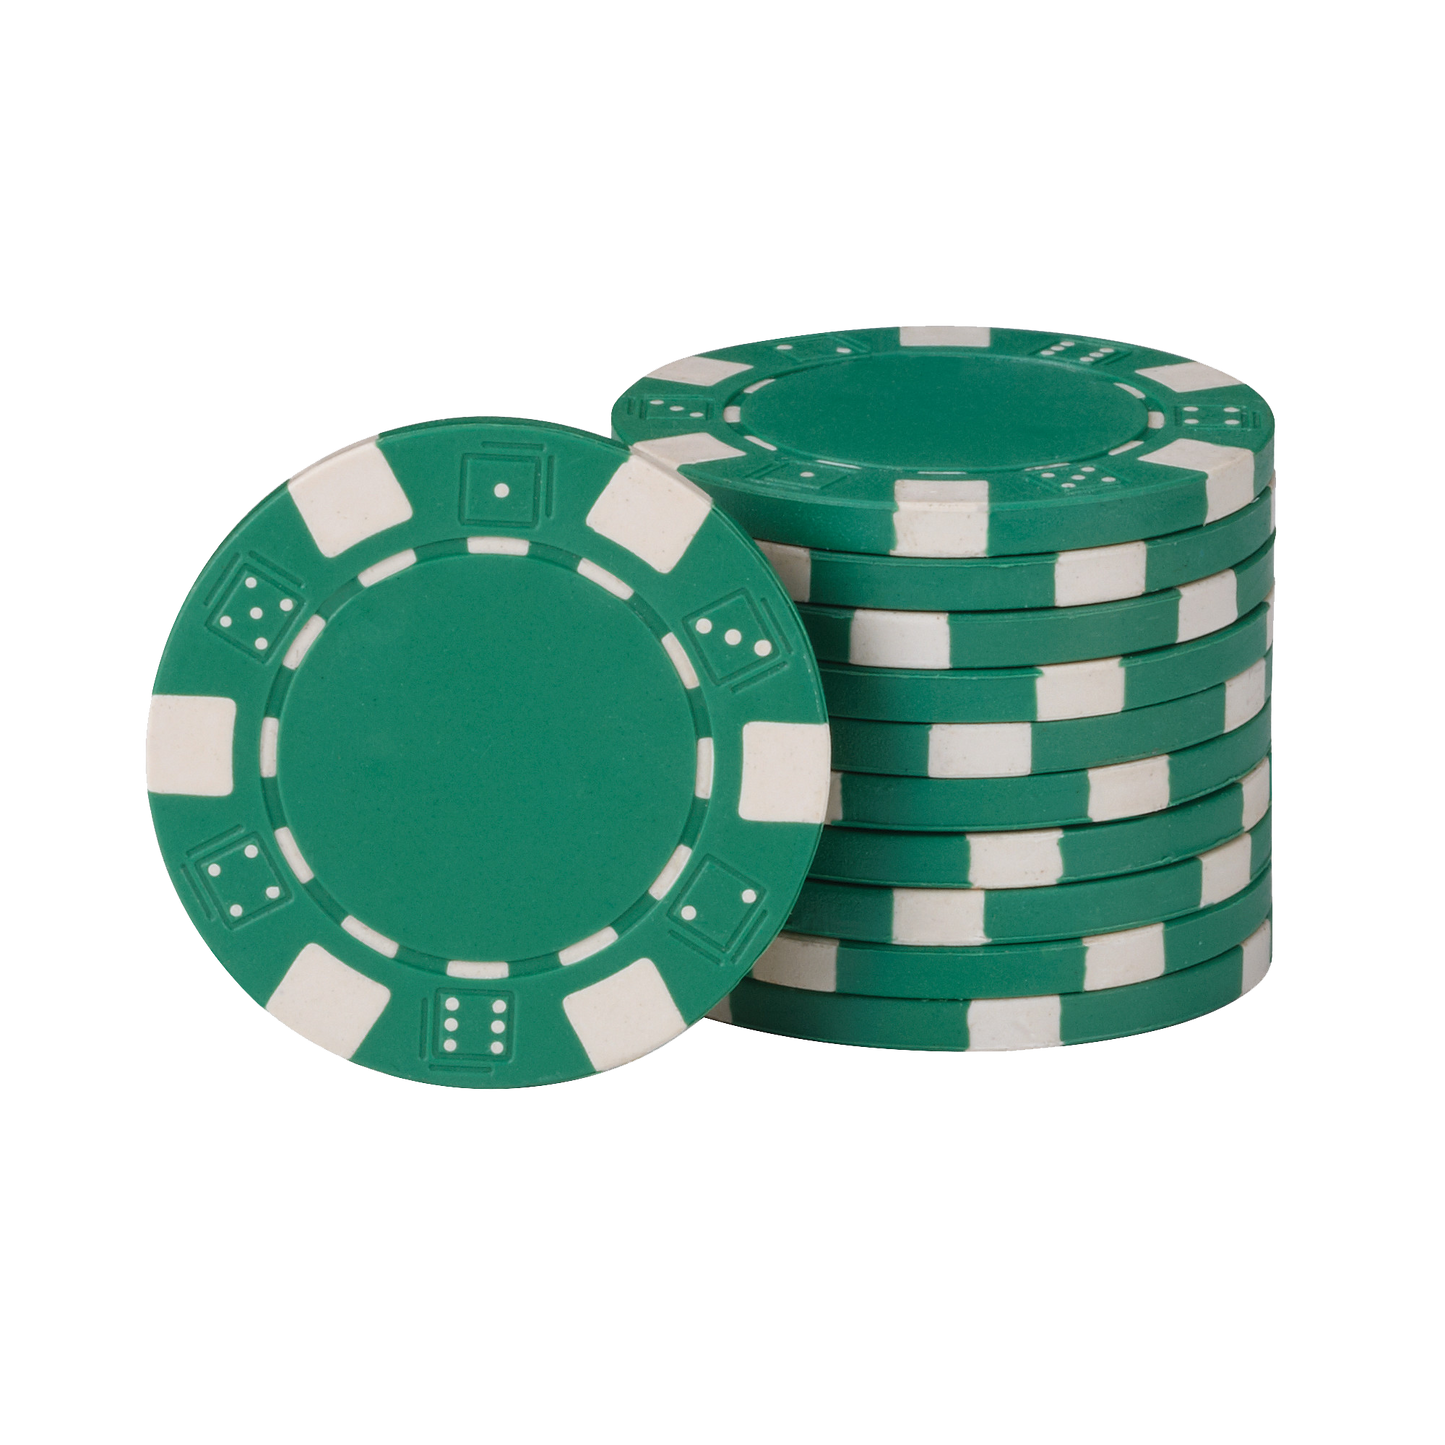 Fat Cat Texas Hold'em Poker Chip Set 500ct.